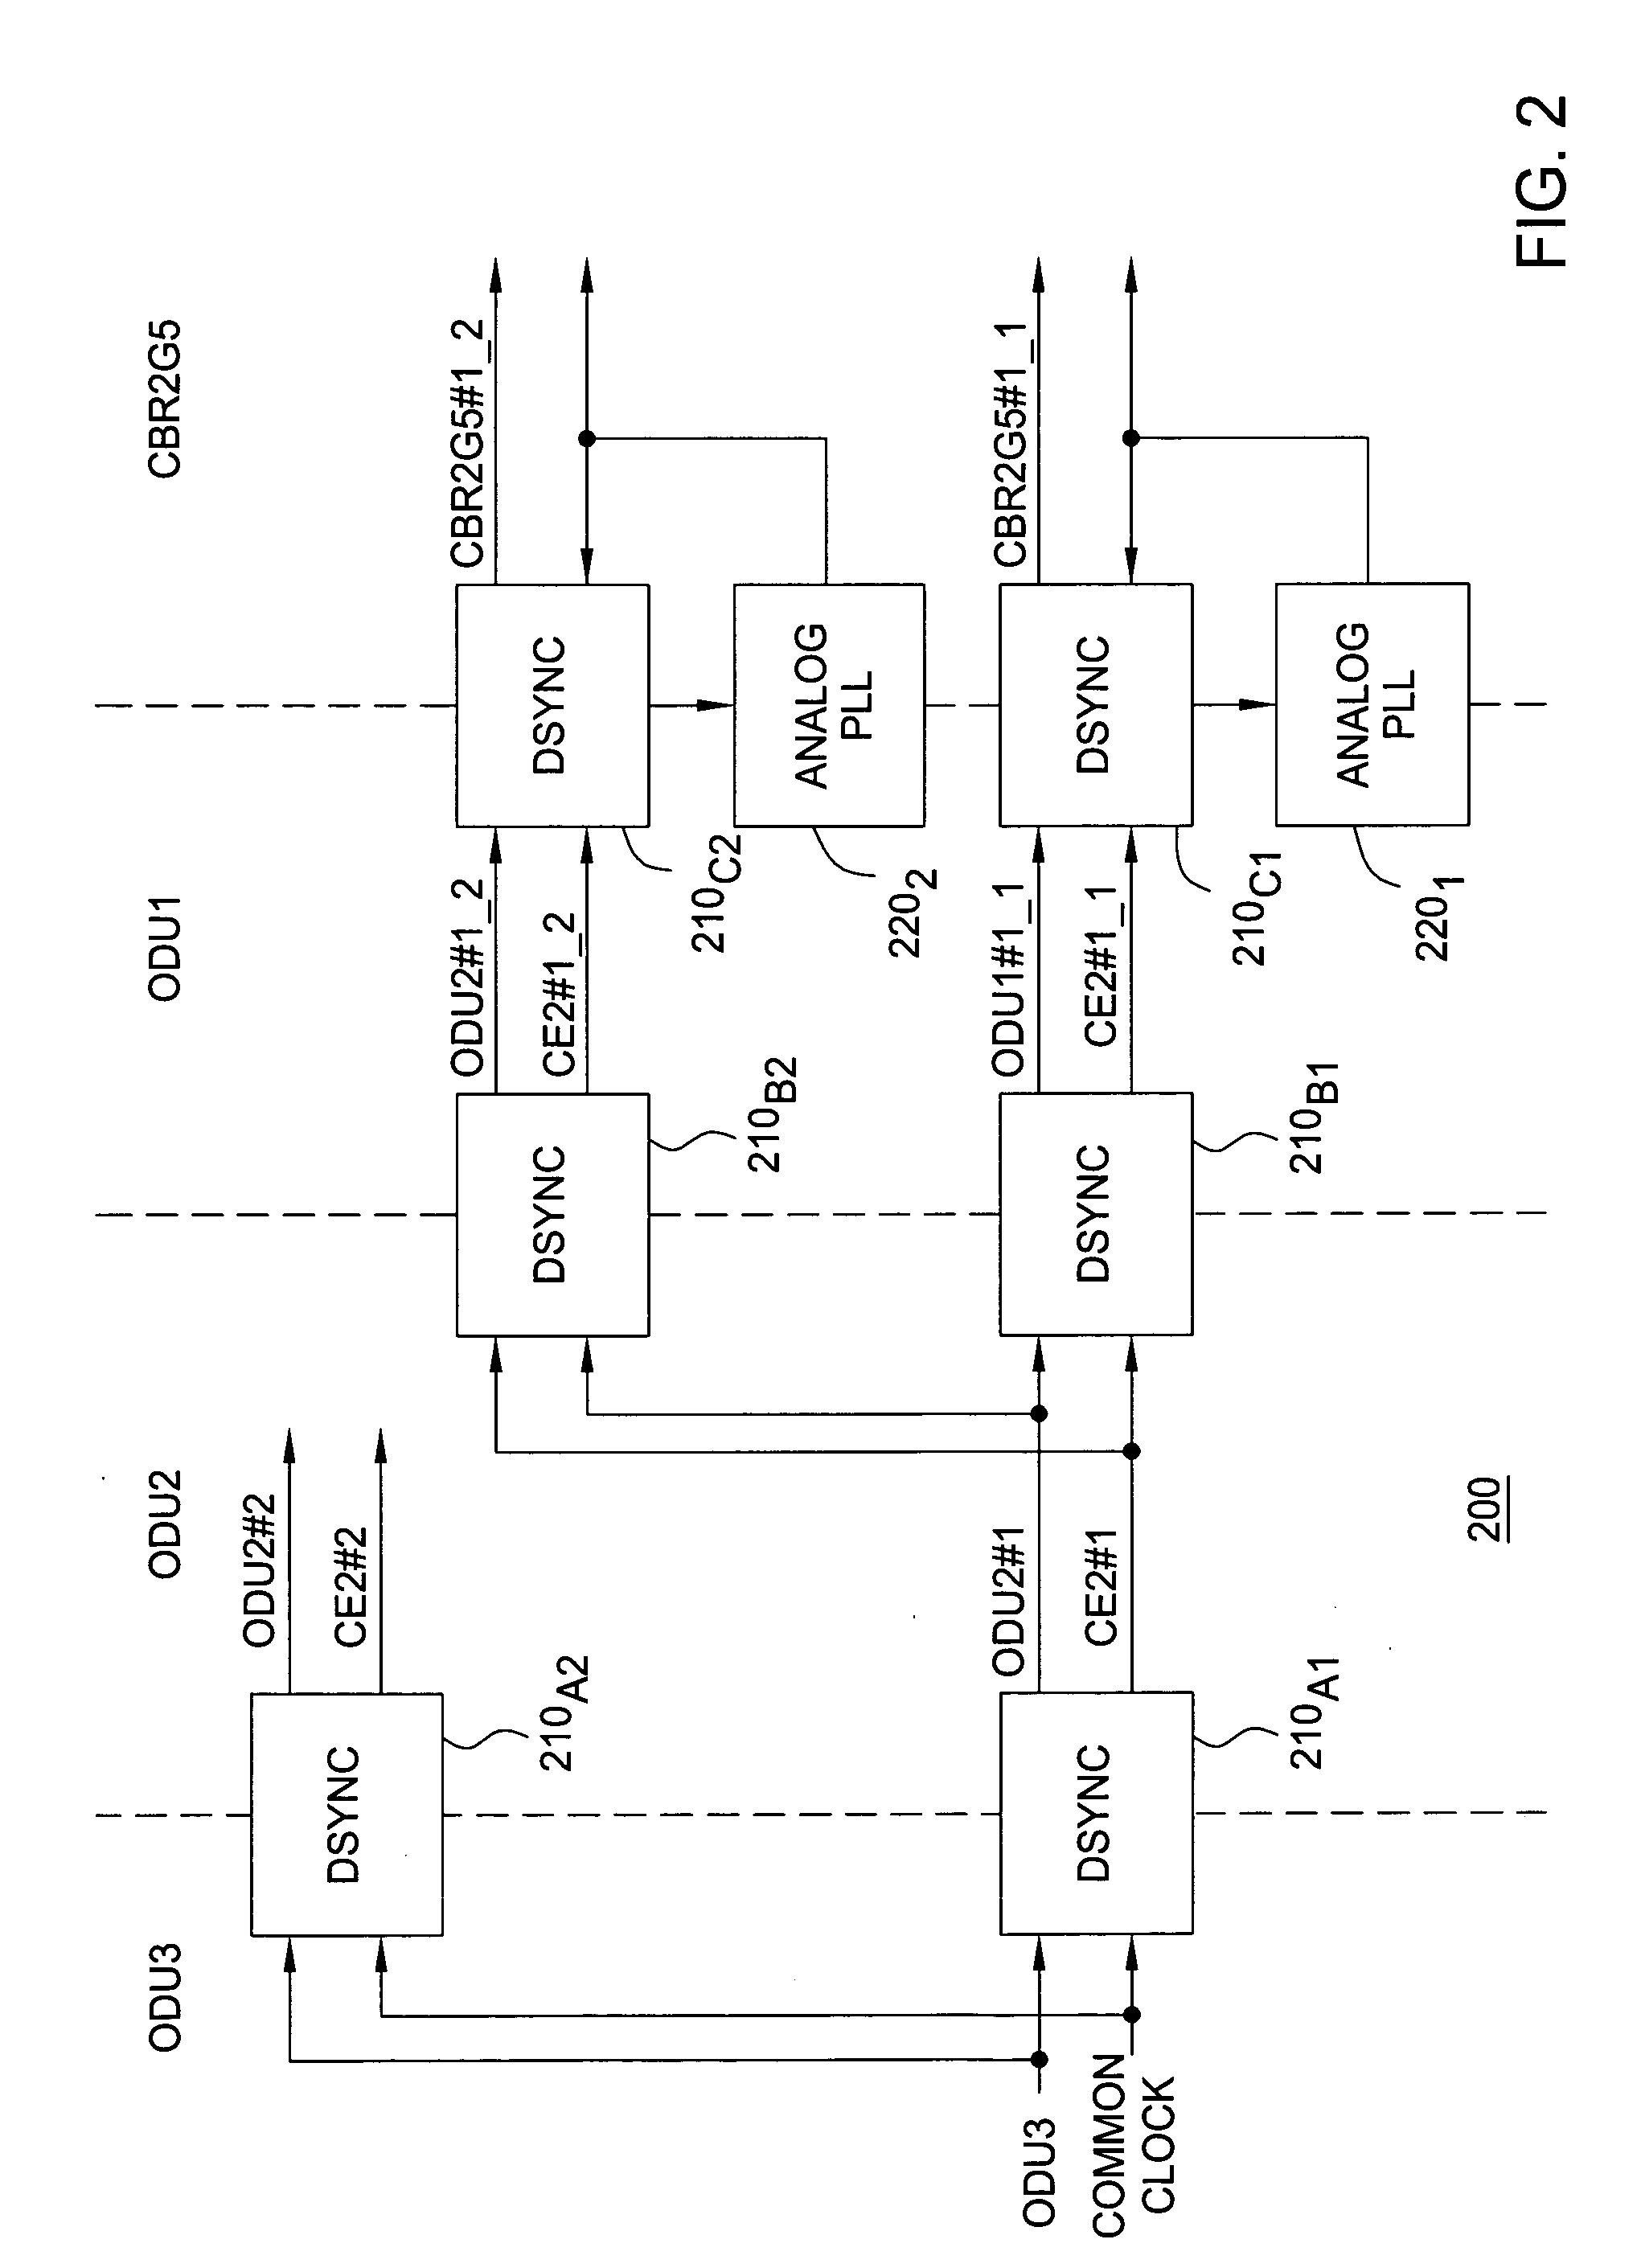 Method and apparatus for generating virtual clock signals